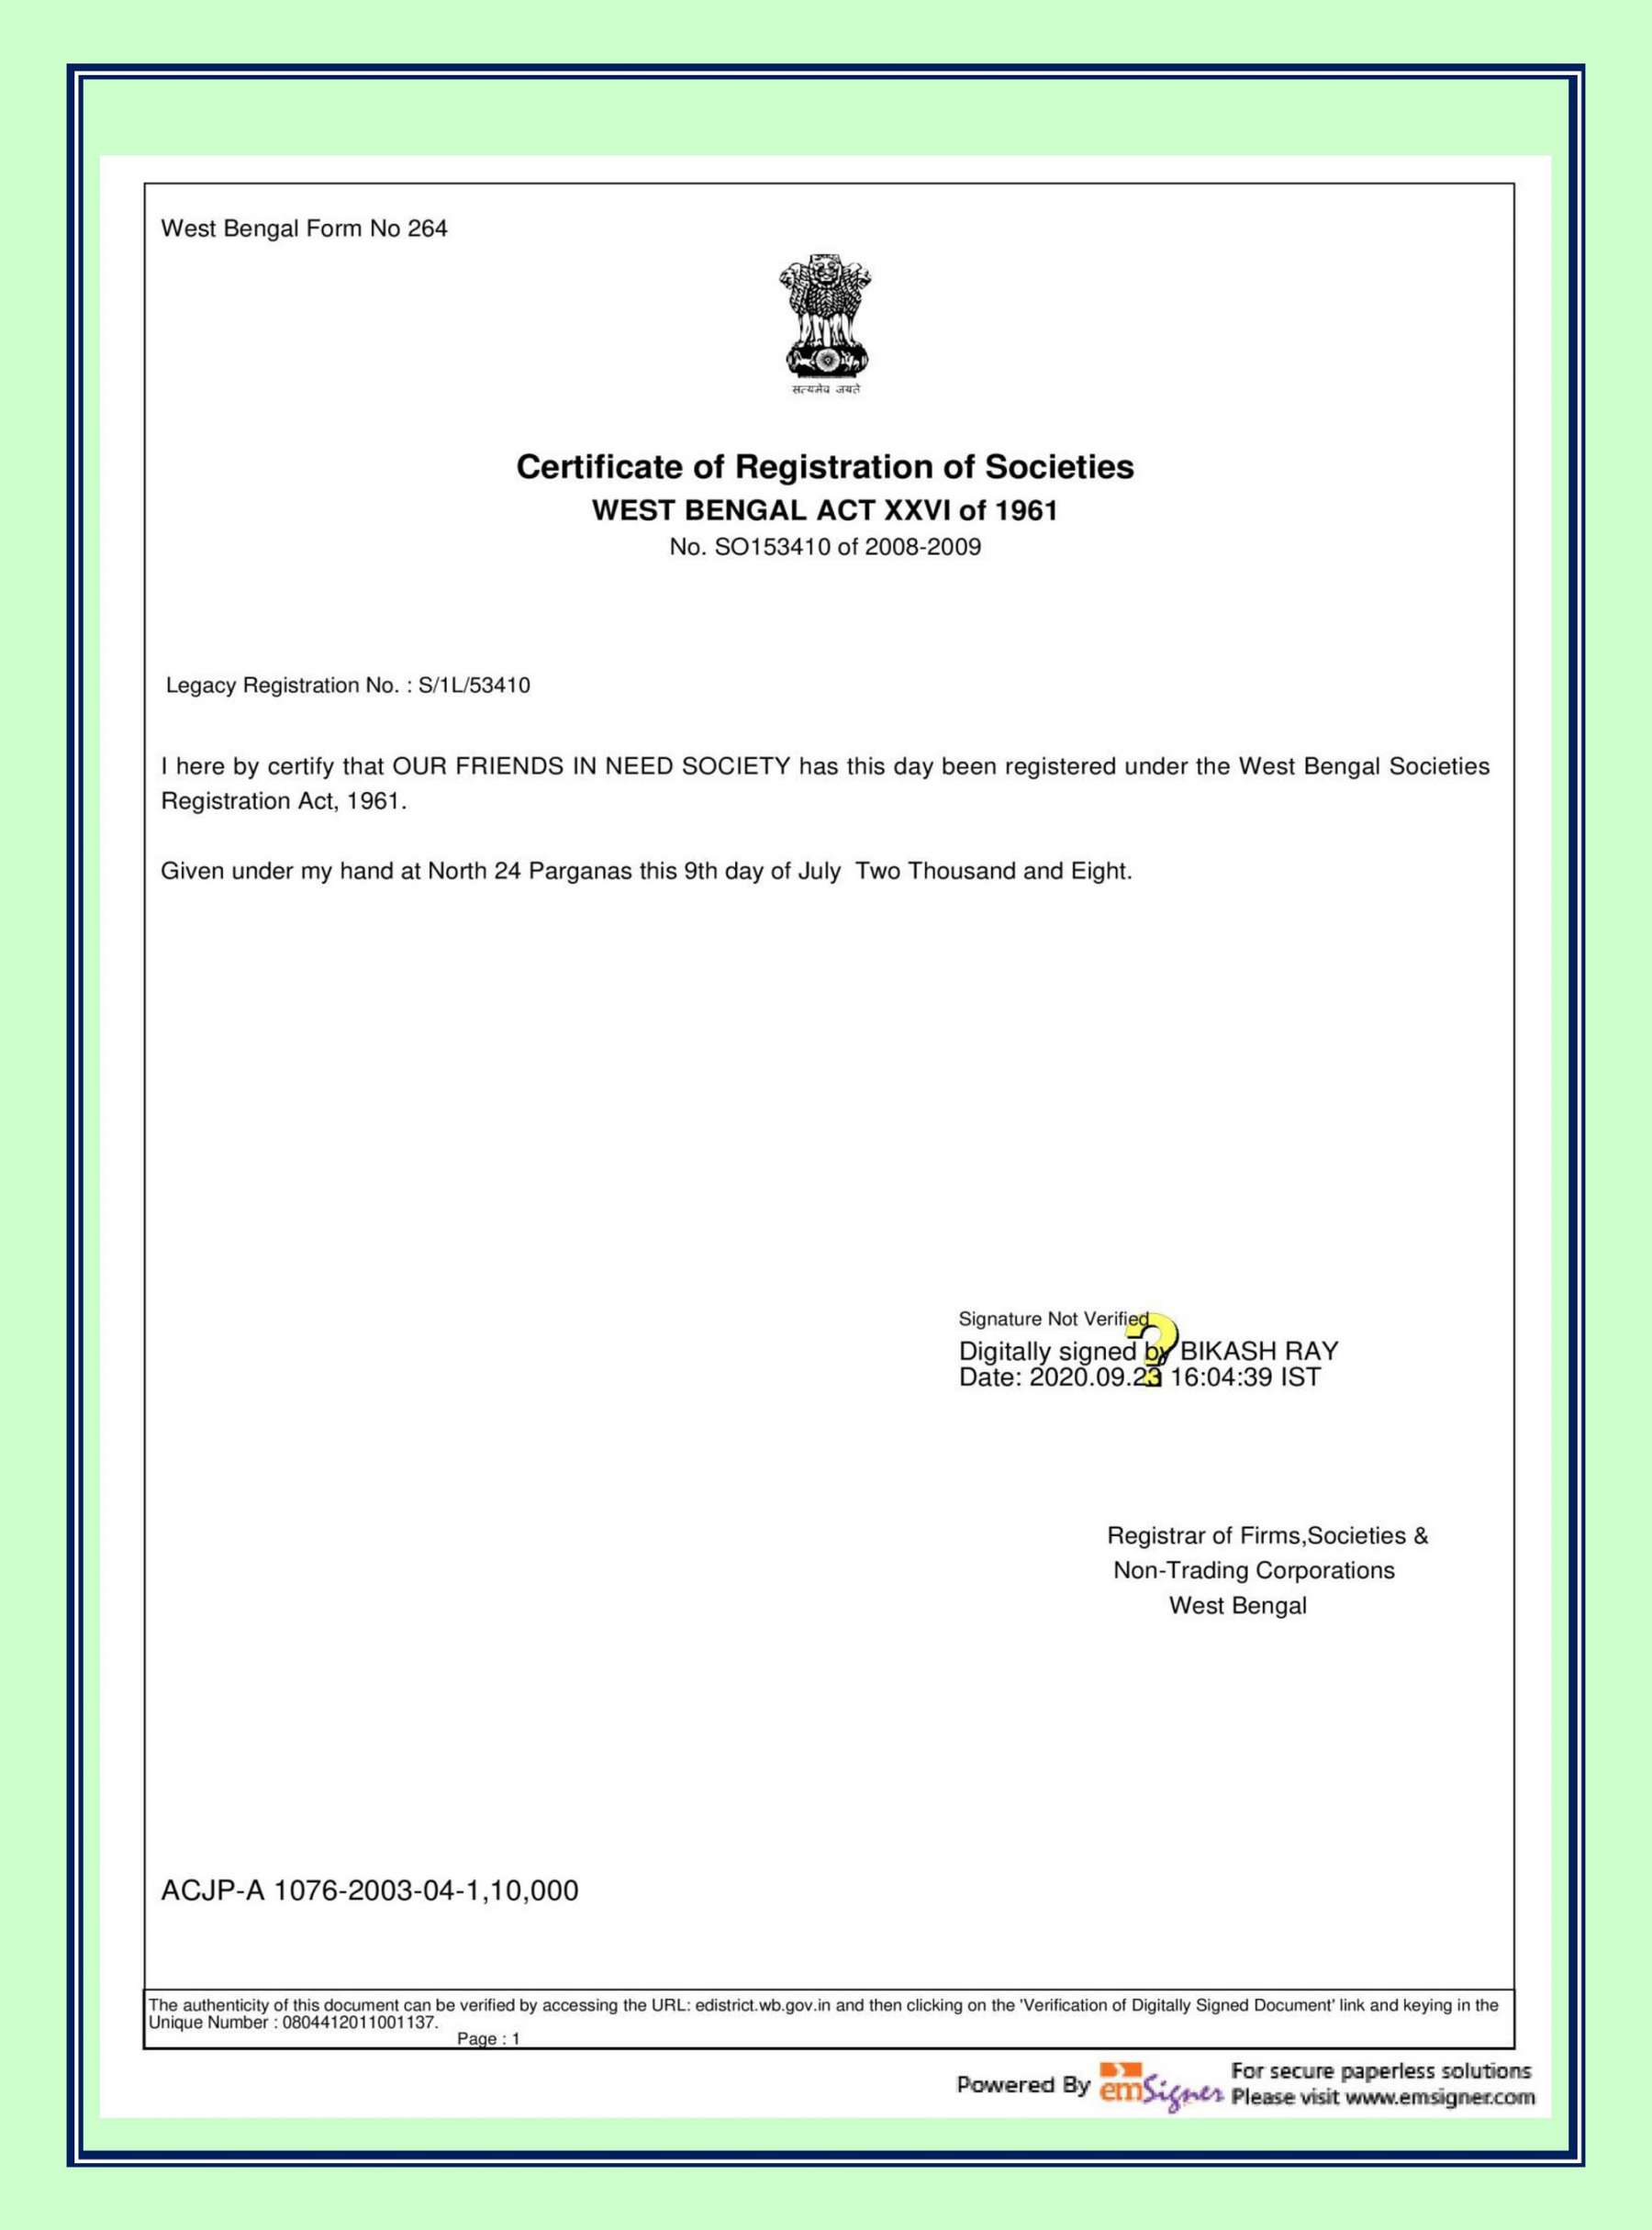 Society Registration Certificate